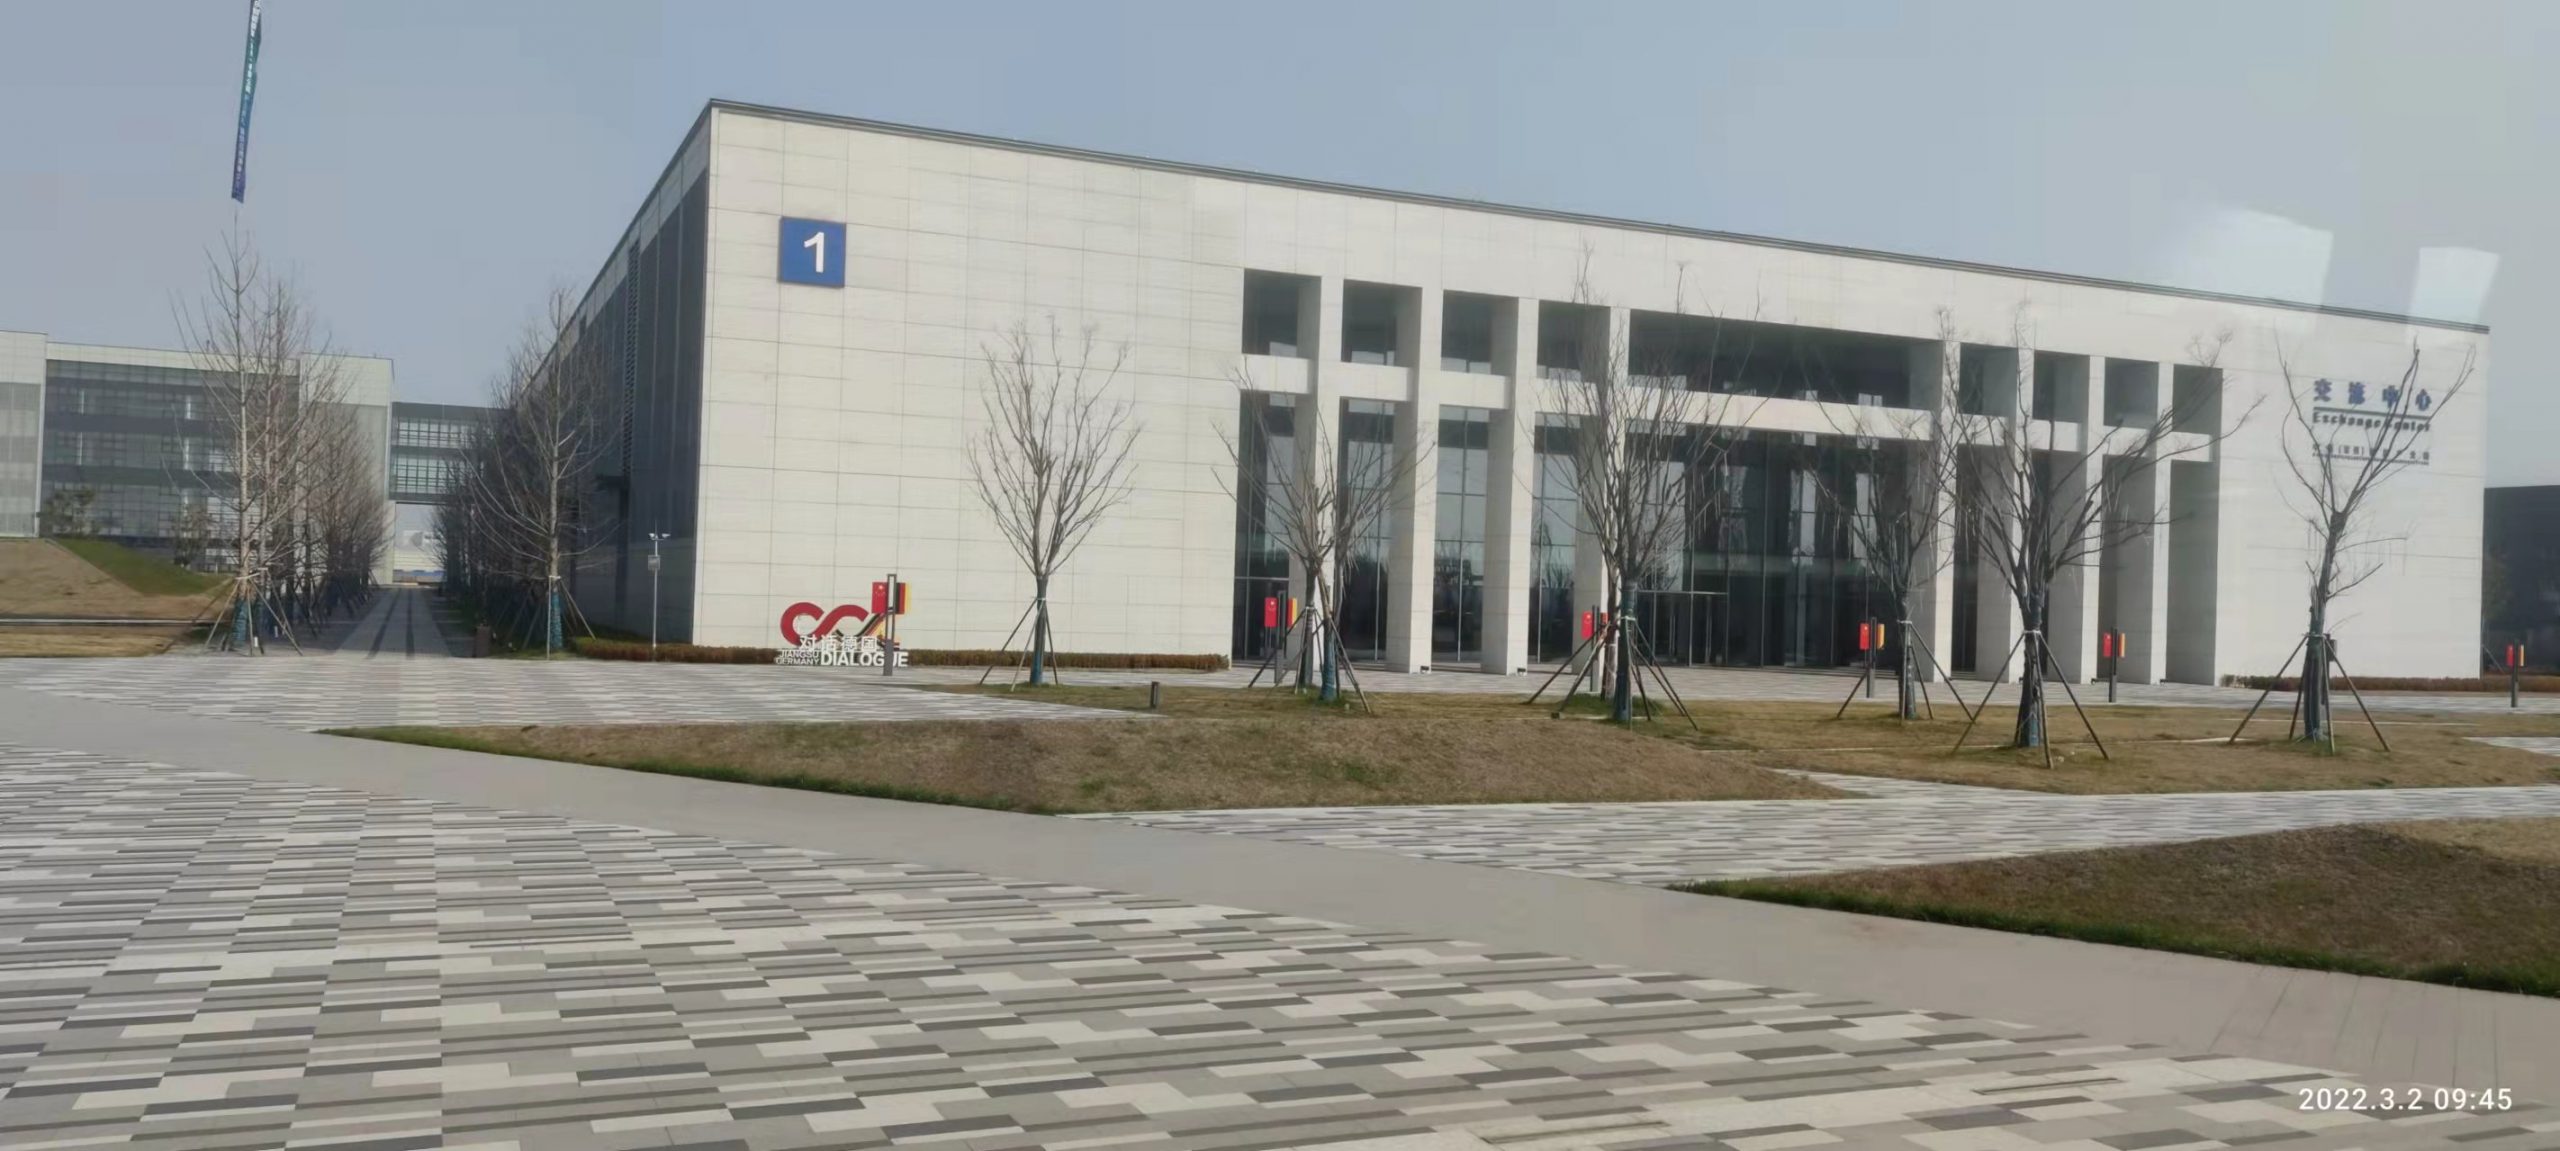 VILLO Intelligent Equipment (Changzhou)Co., Ltd.opened in Jintan Economic Development Zone